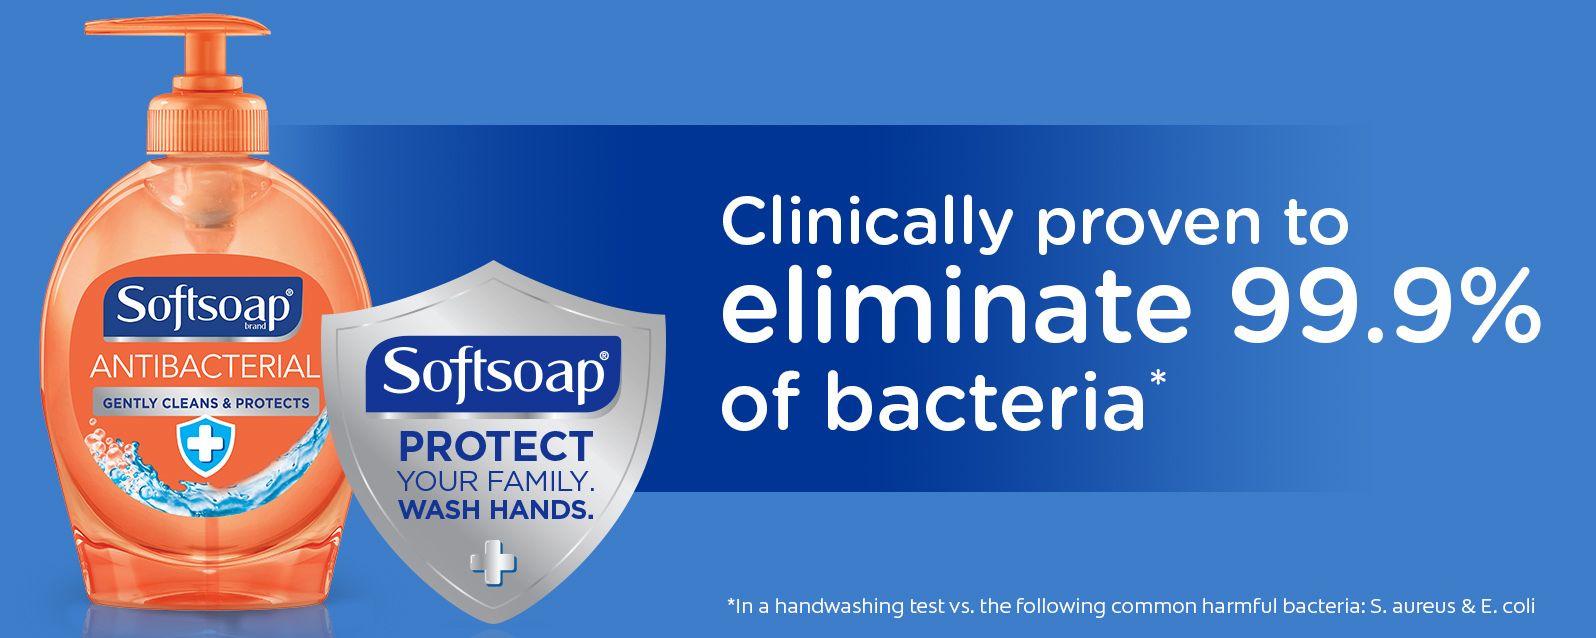 Softsoap Logo - Softsoap 56 Fl Oz Antibacterial Fresh Citrus Hand Soap At Lowes.com